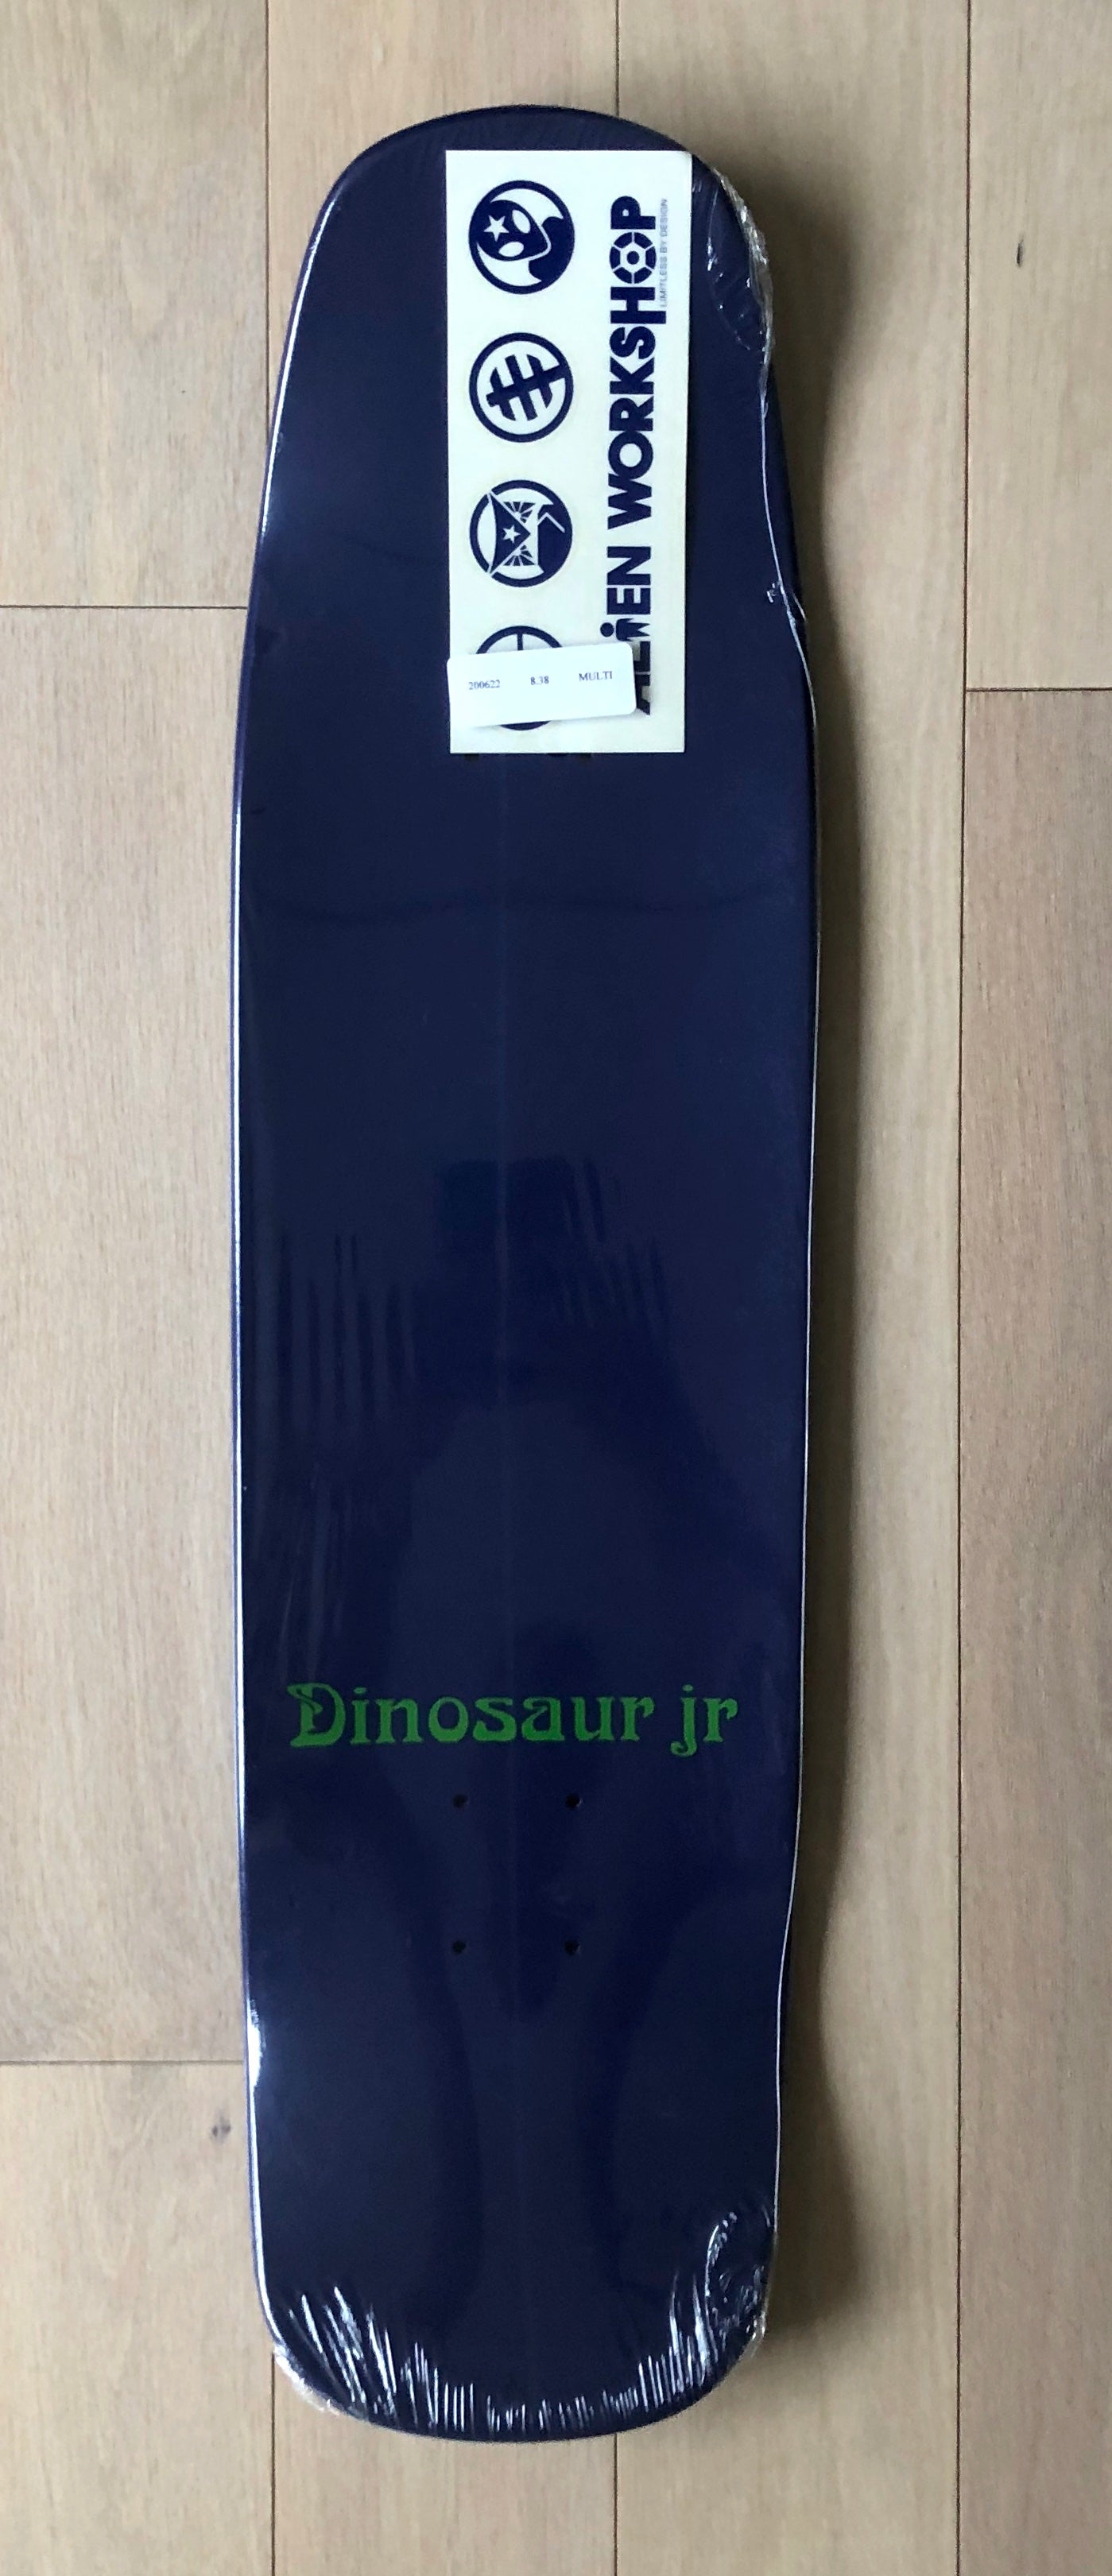 Dinosaur Jr x Alien Workshop "Limited Edition", 2006